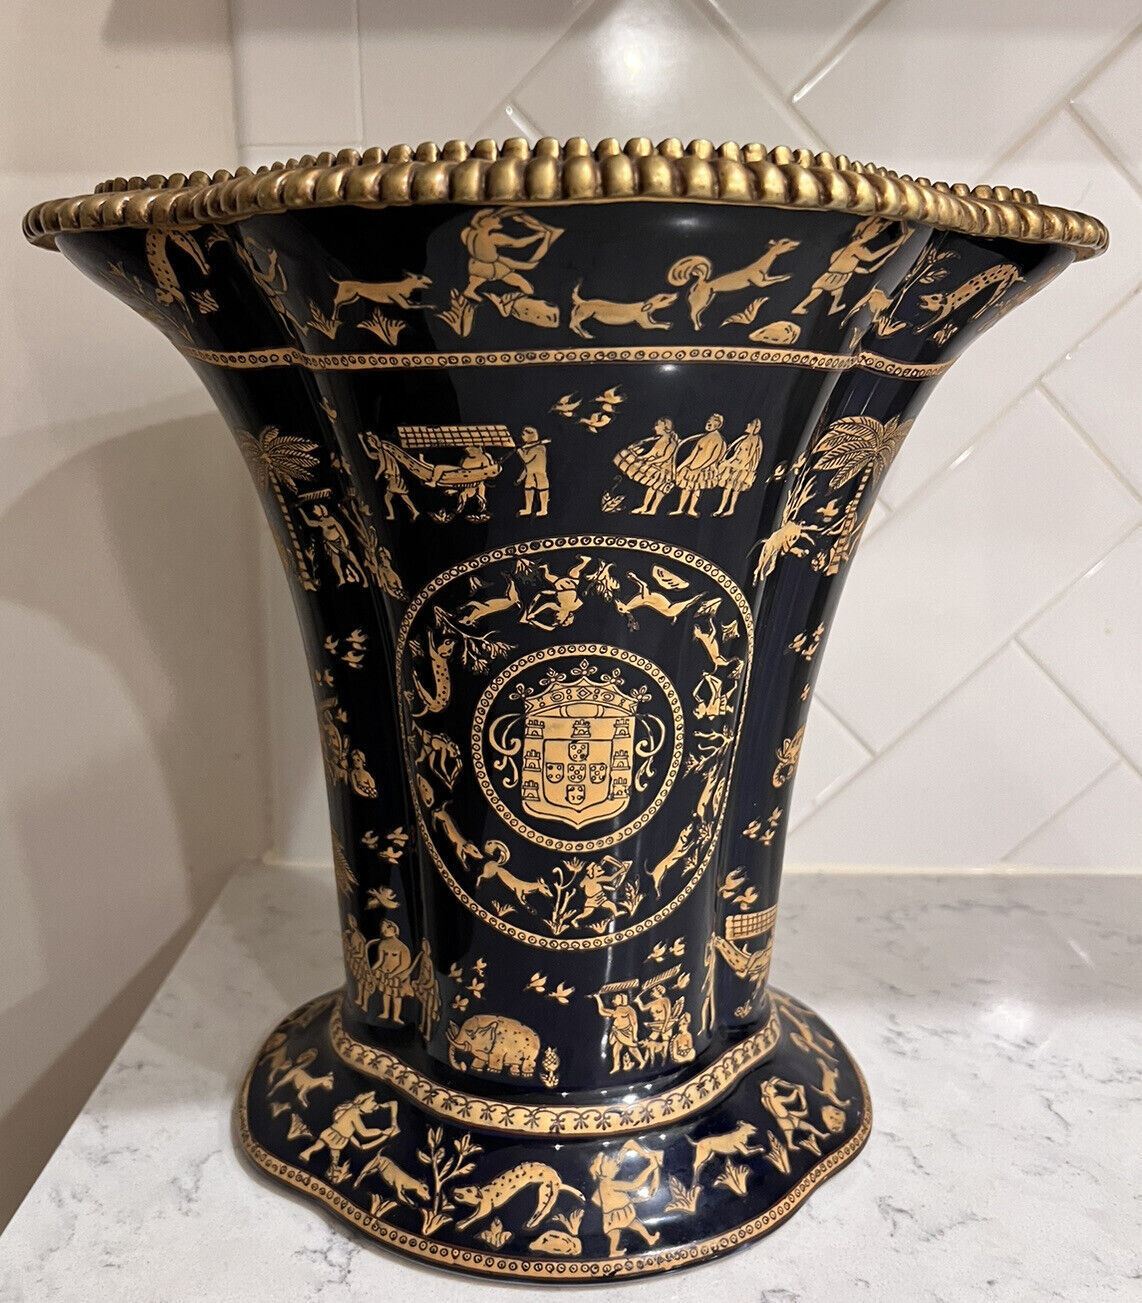 JUWC 1897 Vase Brass Trim Antique Chinese Asian Decor